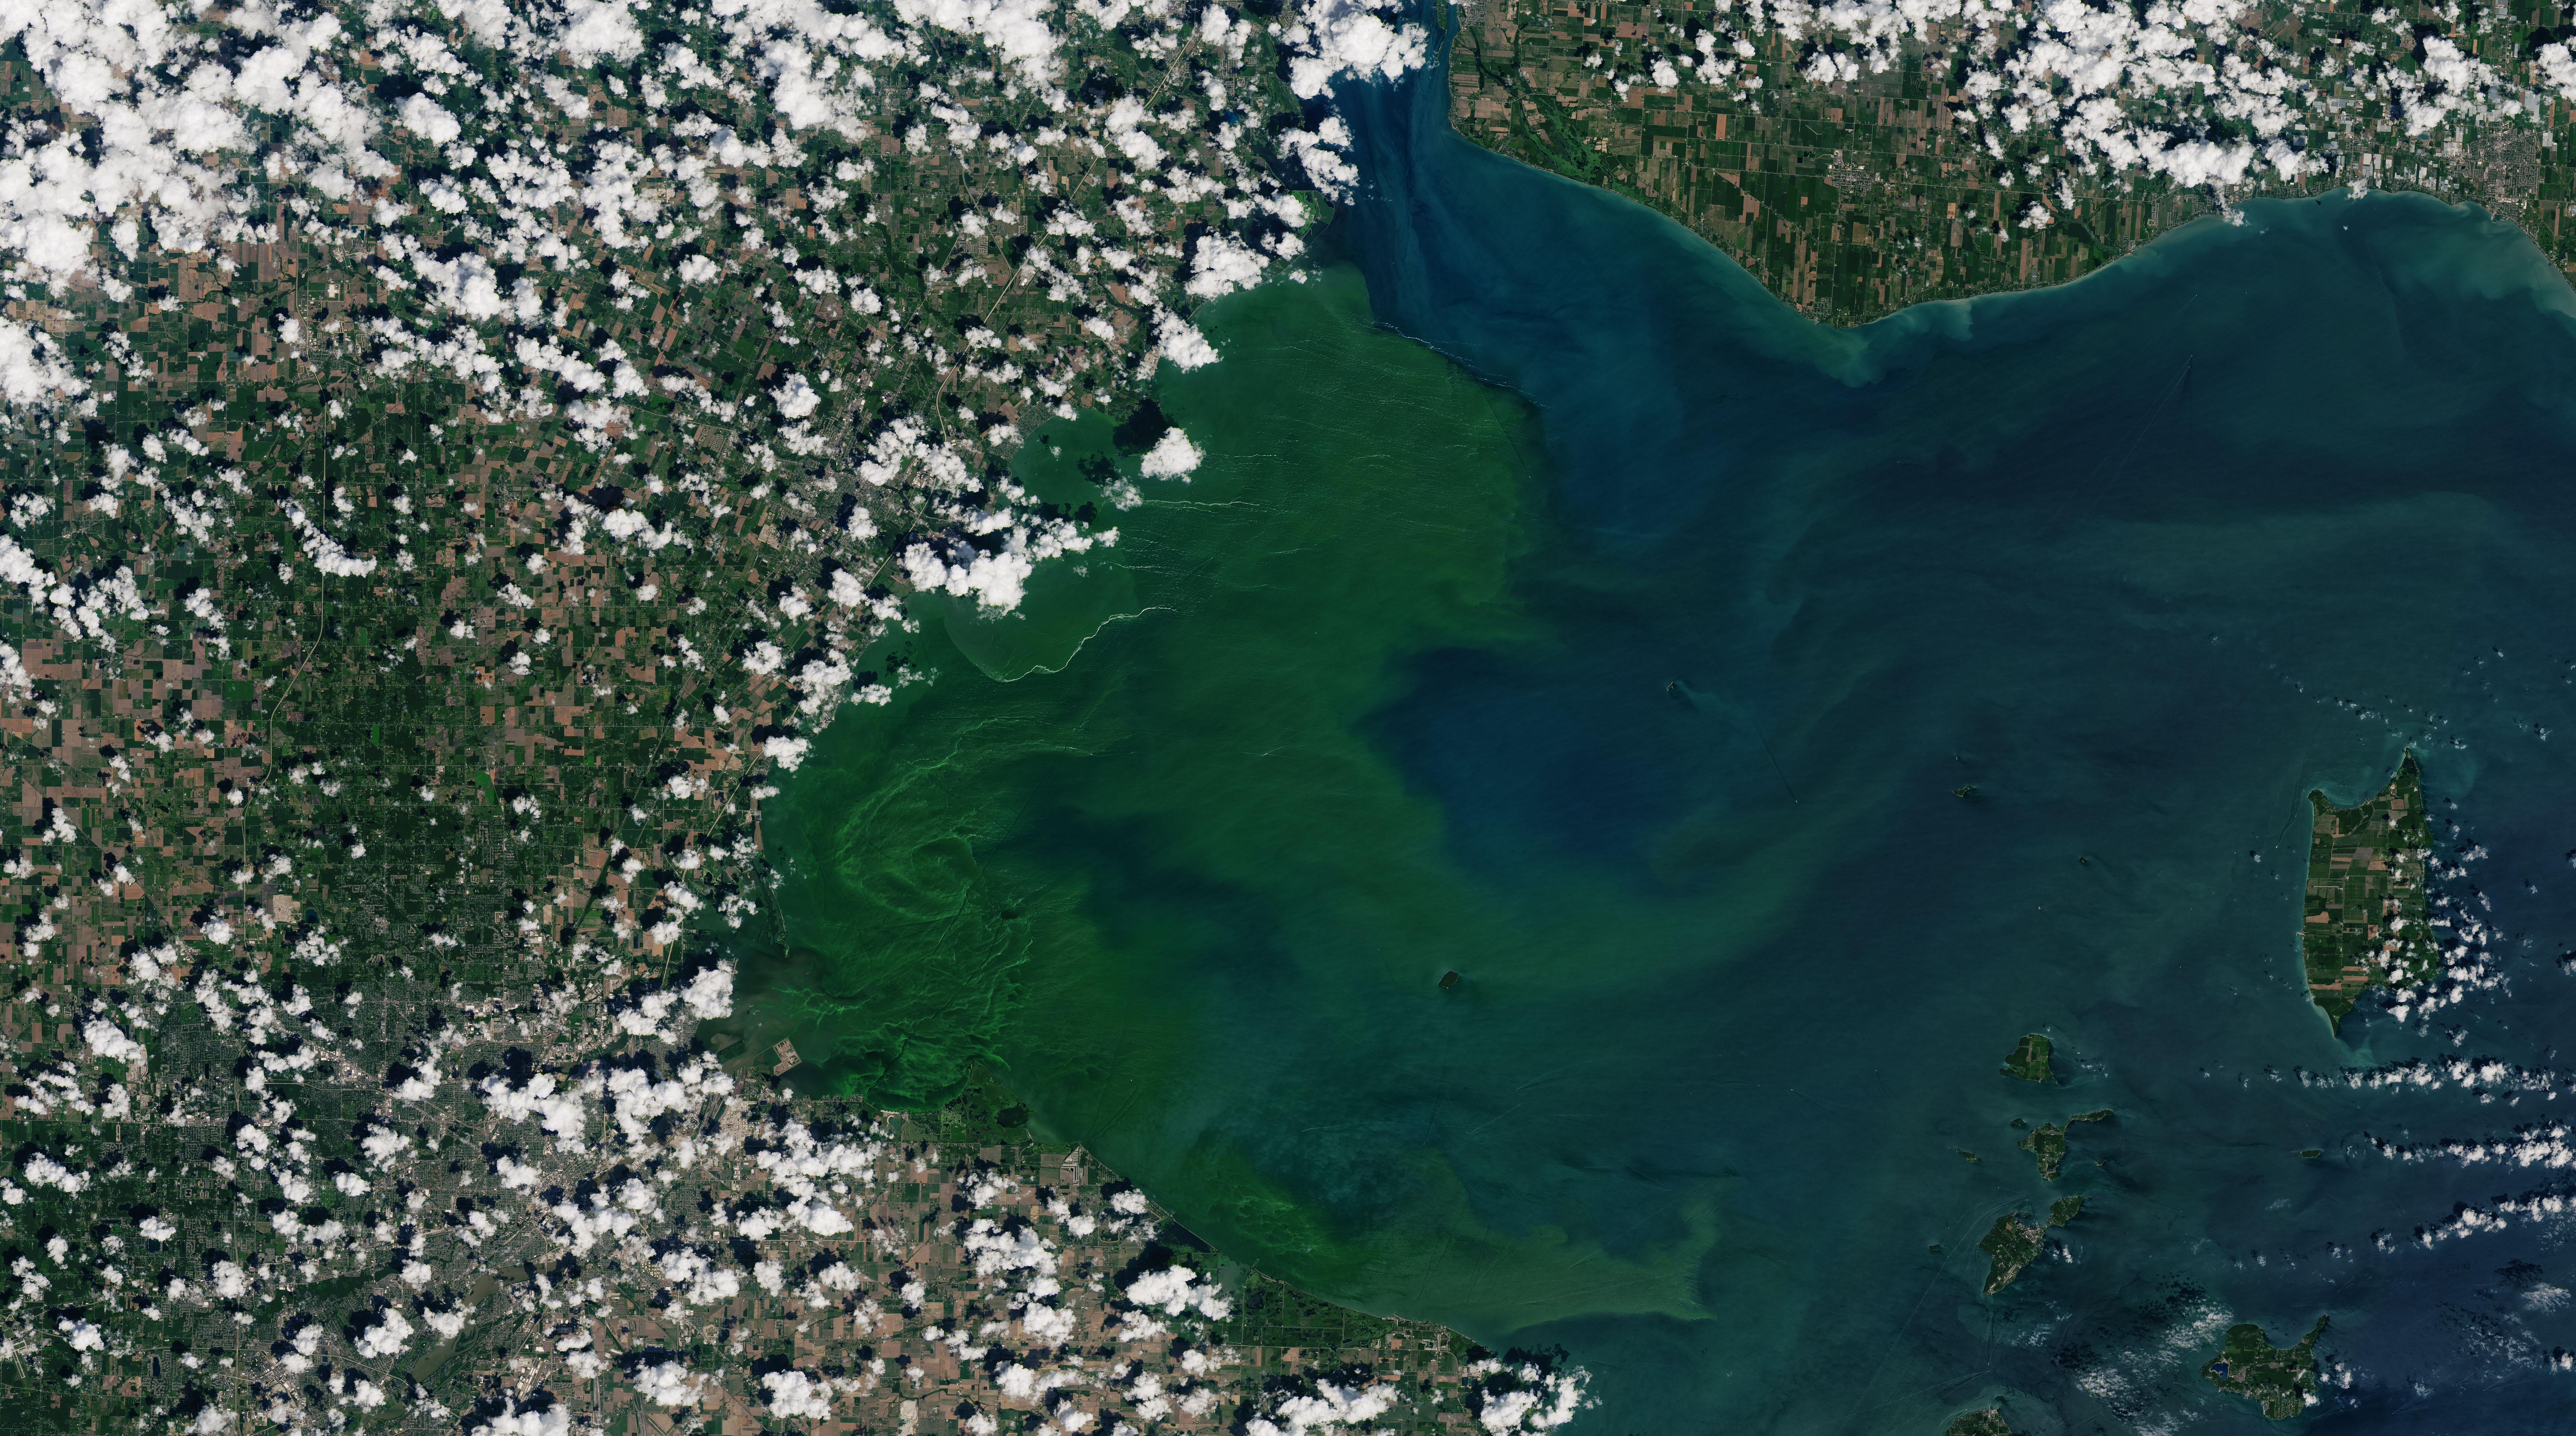 July 2019 toxic algae bloom at western Lake Erie (PC: NASA Earth Observatory)